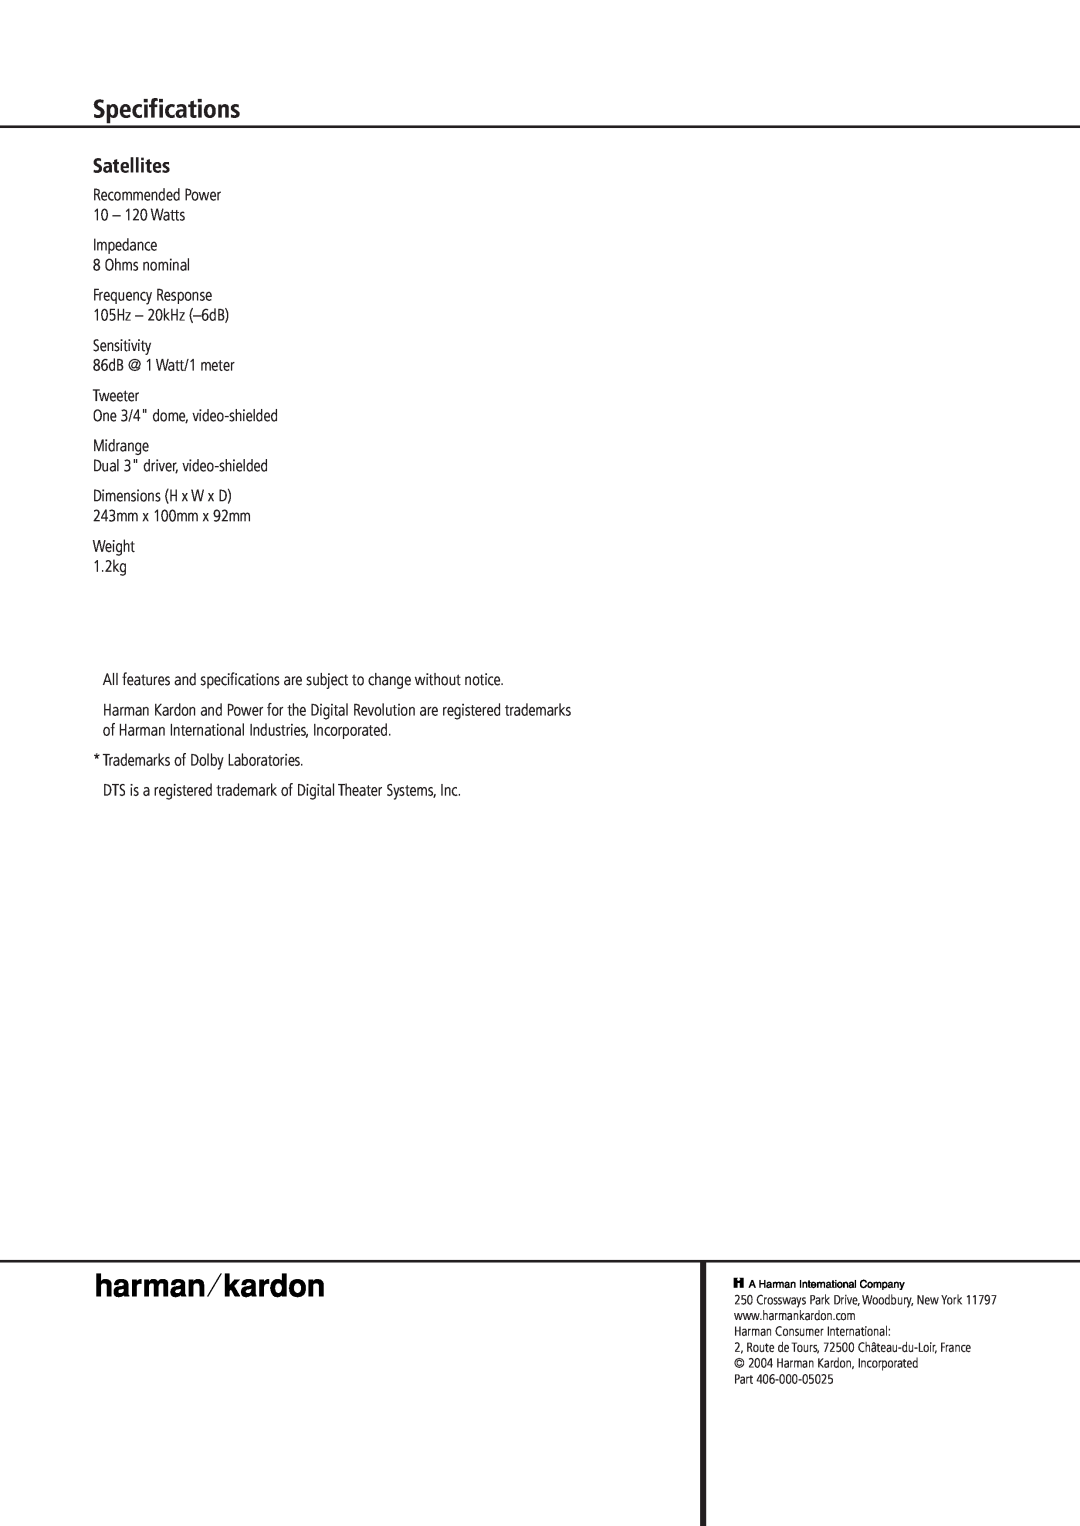 Harman-Kardon HKS 4 owner manual Specifications, Satellites 